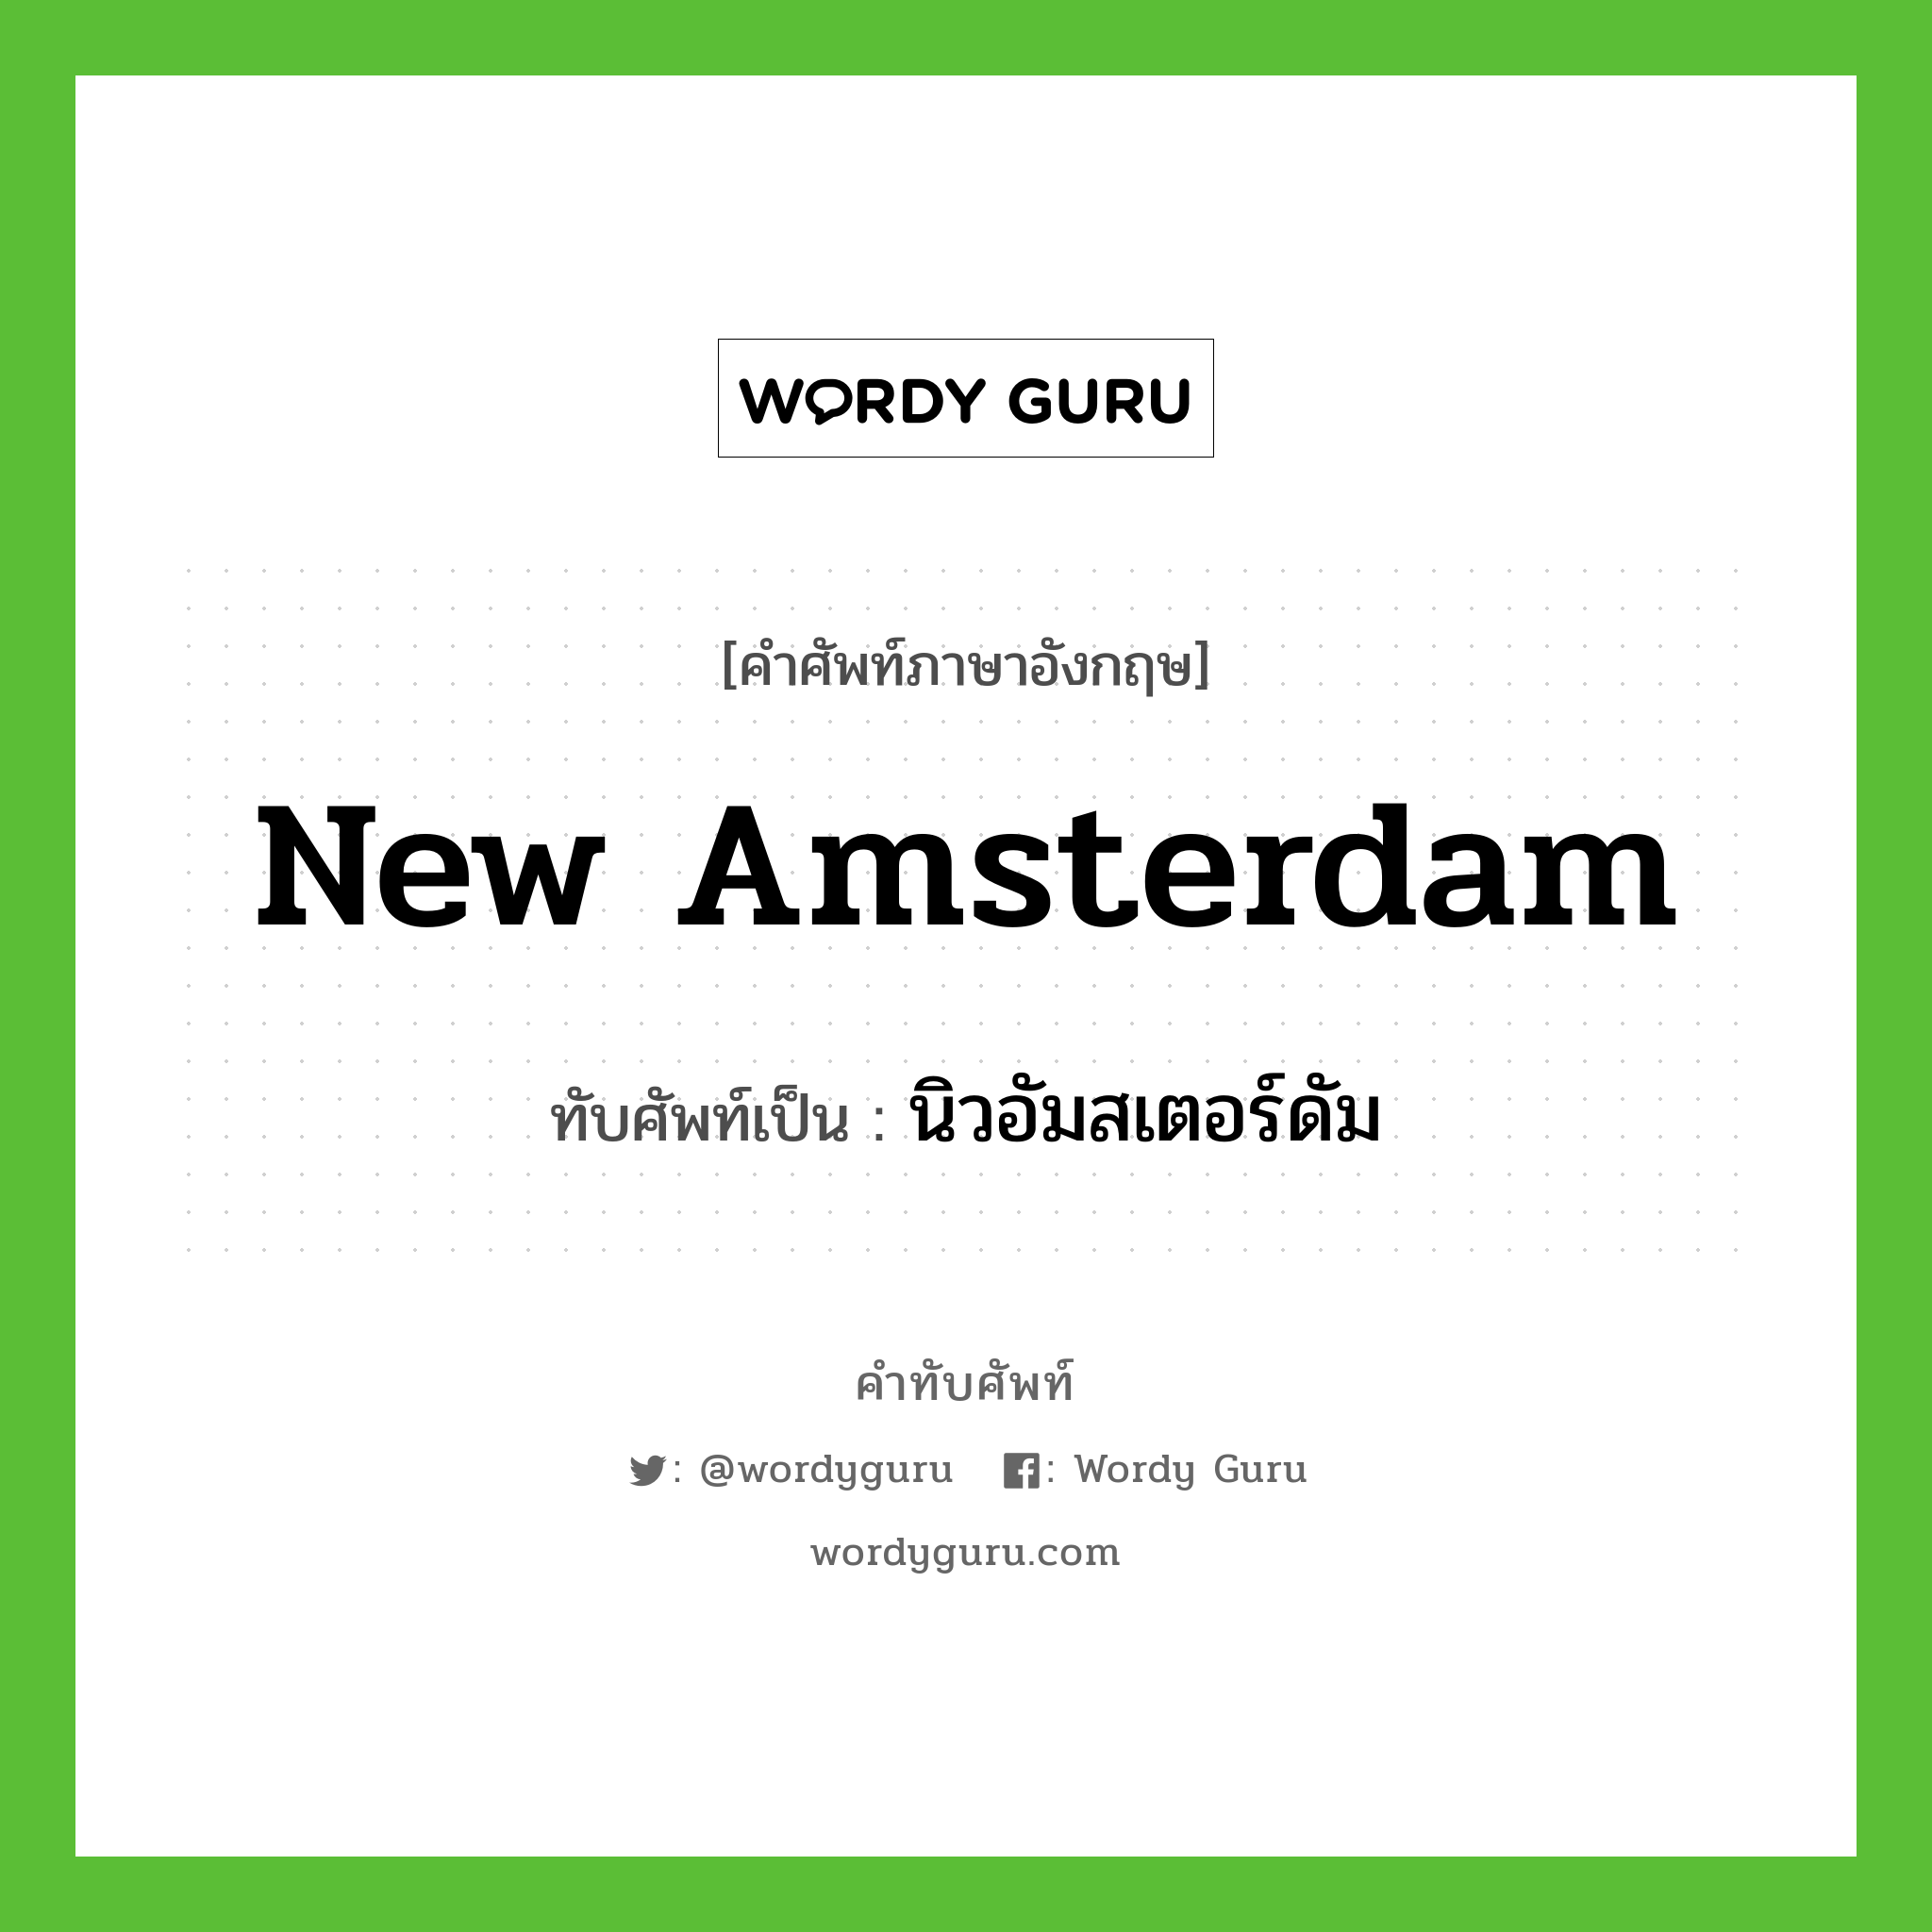 New Amsterdam เขียนเป็นคำไทยว่าอะไร?, คำศัพท์ภาษาอังกฤษ New Amsterdam ทับศัพท์เป็น นิวอัมสเตอร์ดัม